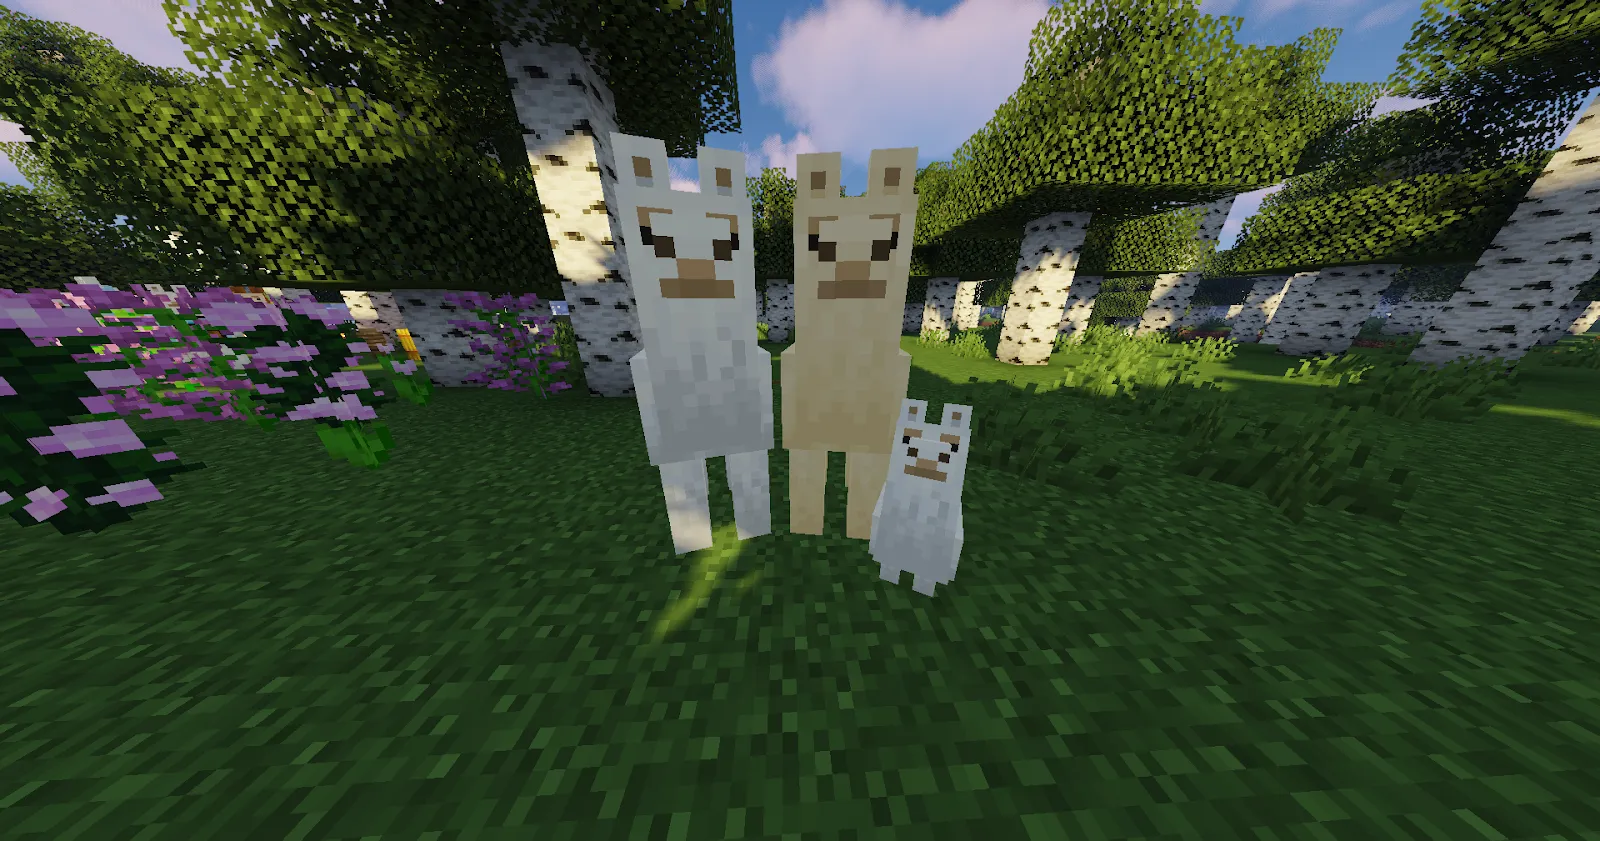 Family of 2 adult Minecraft Llamas and 1 baby Llama (cria)